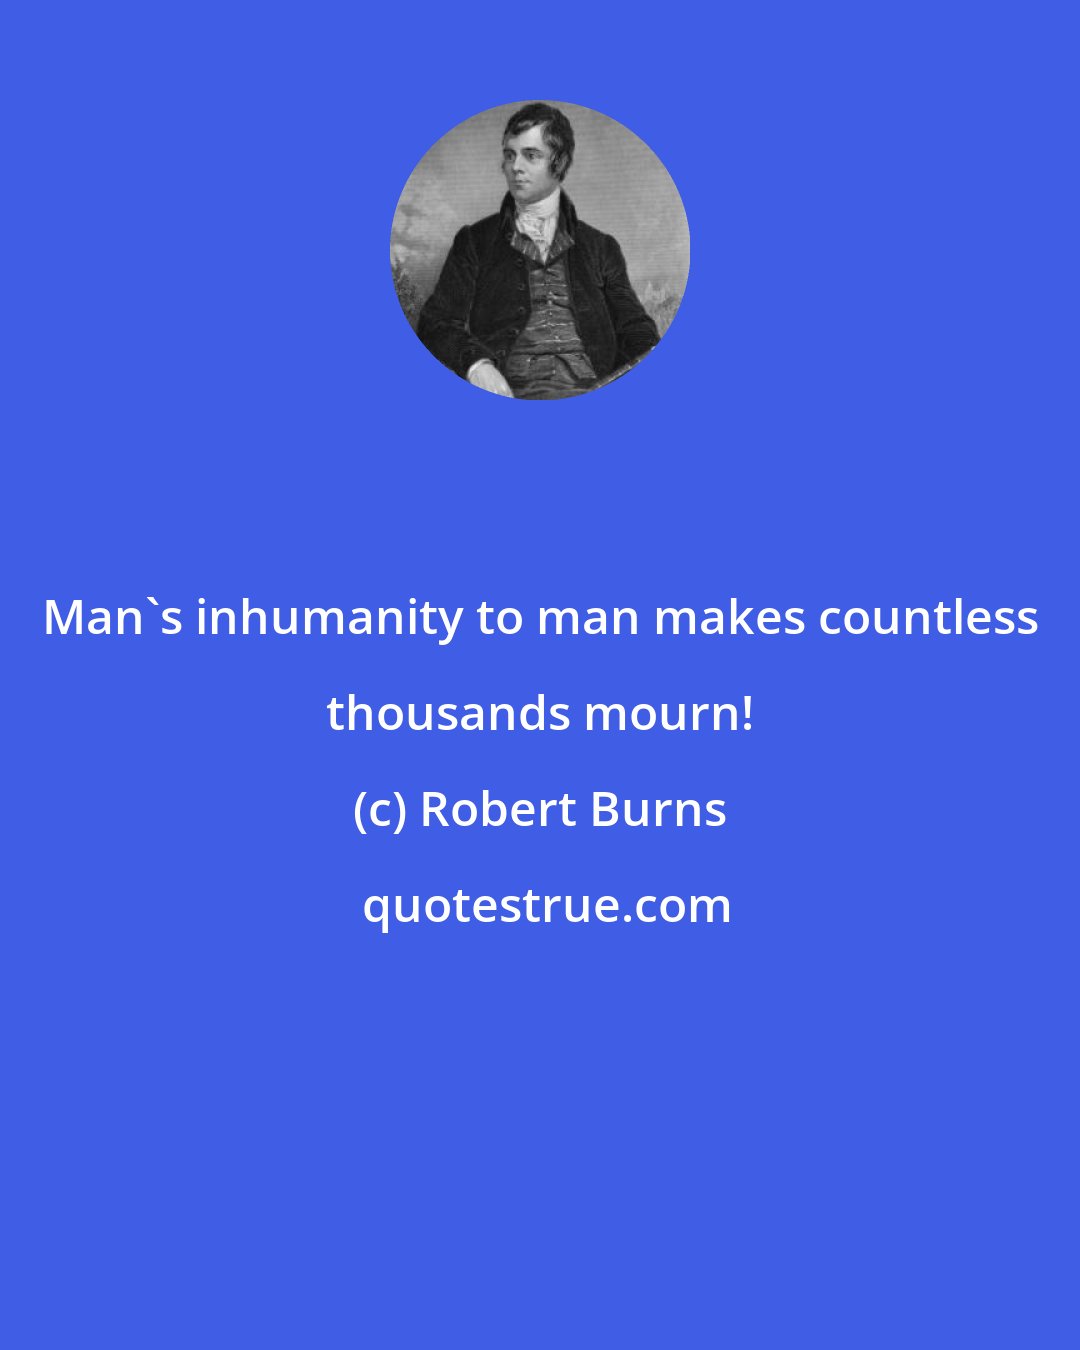 Robert Burns: Man's inhumanity to man makes countless thousands mourn!